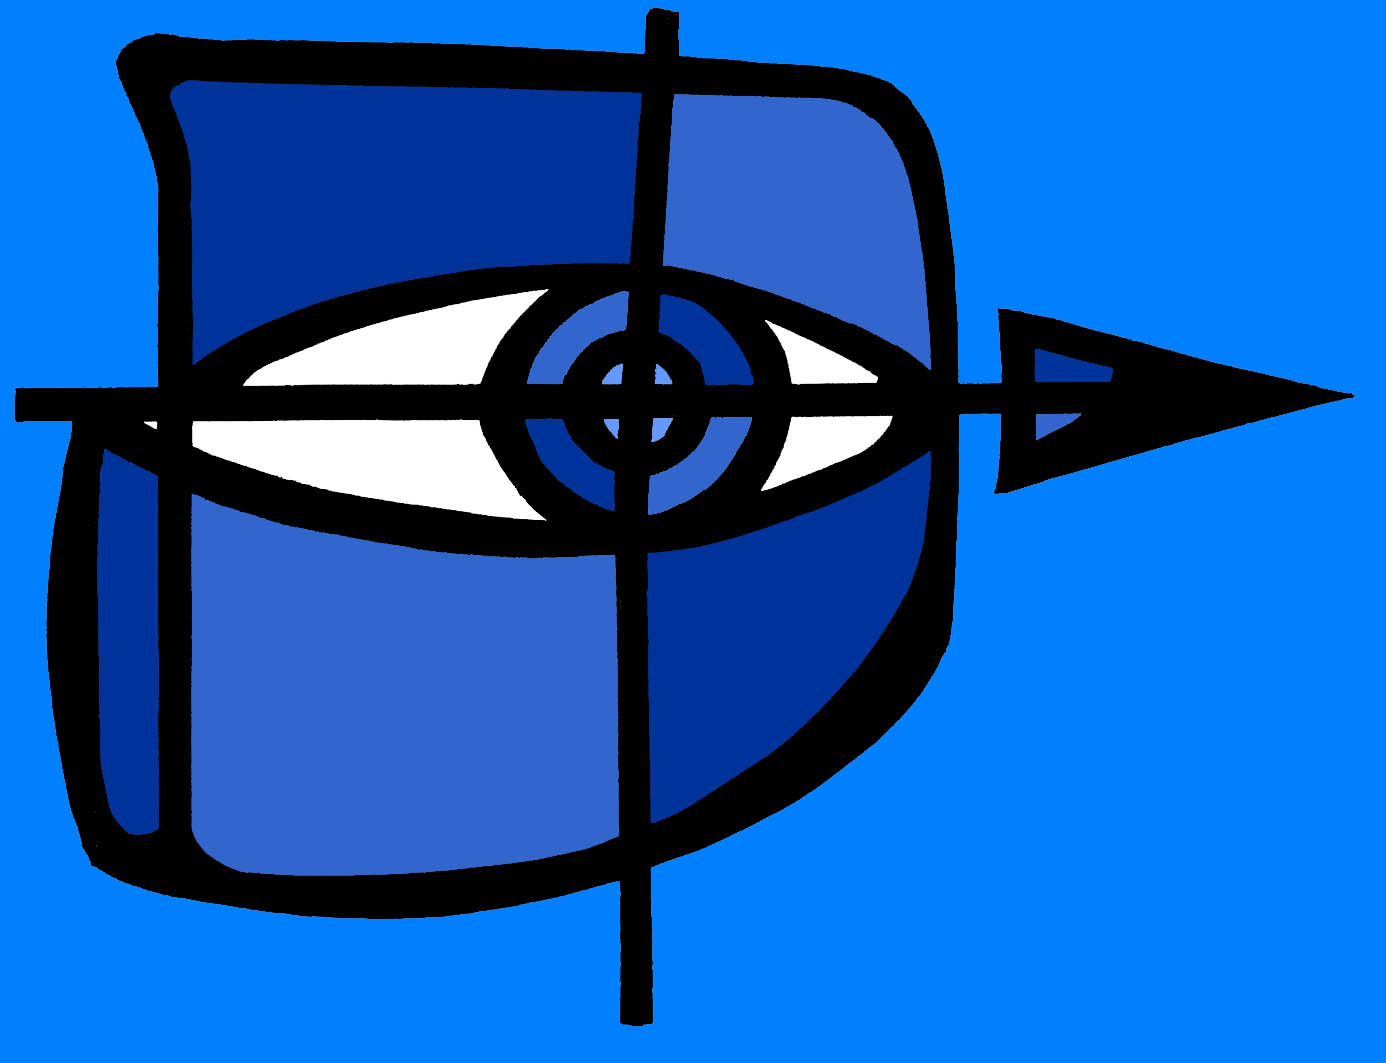 Effective Vision logo